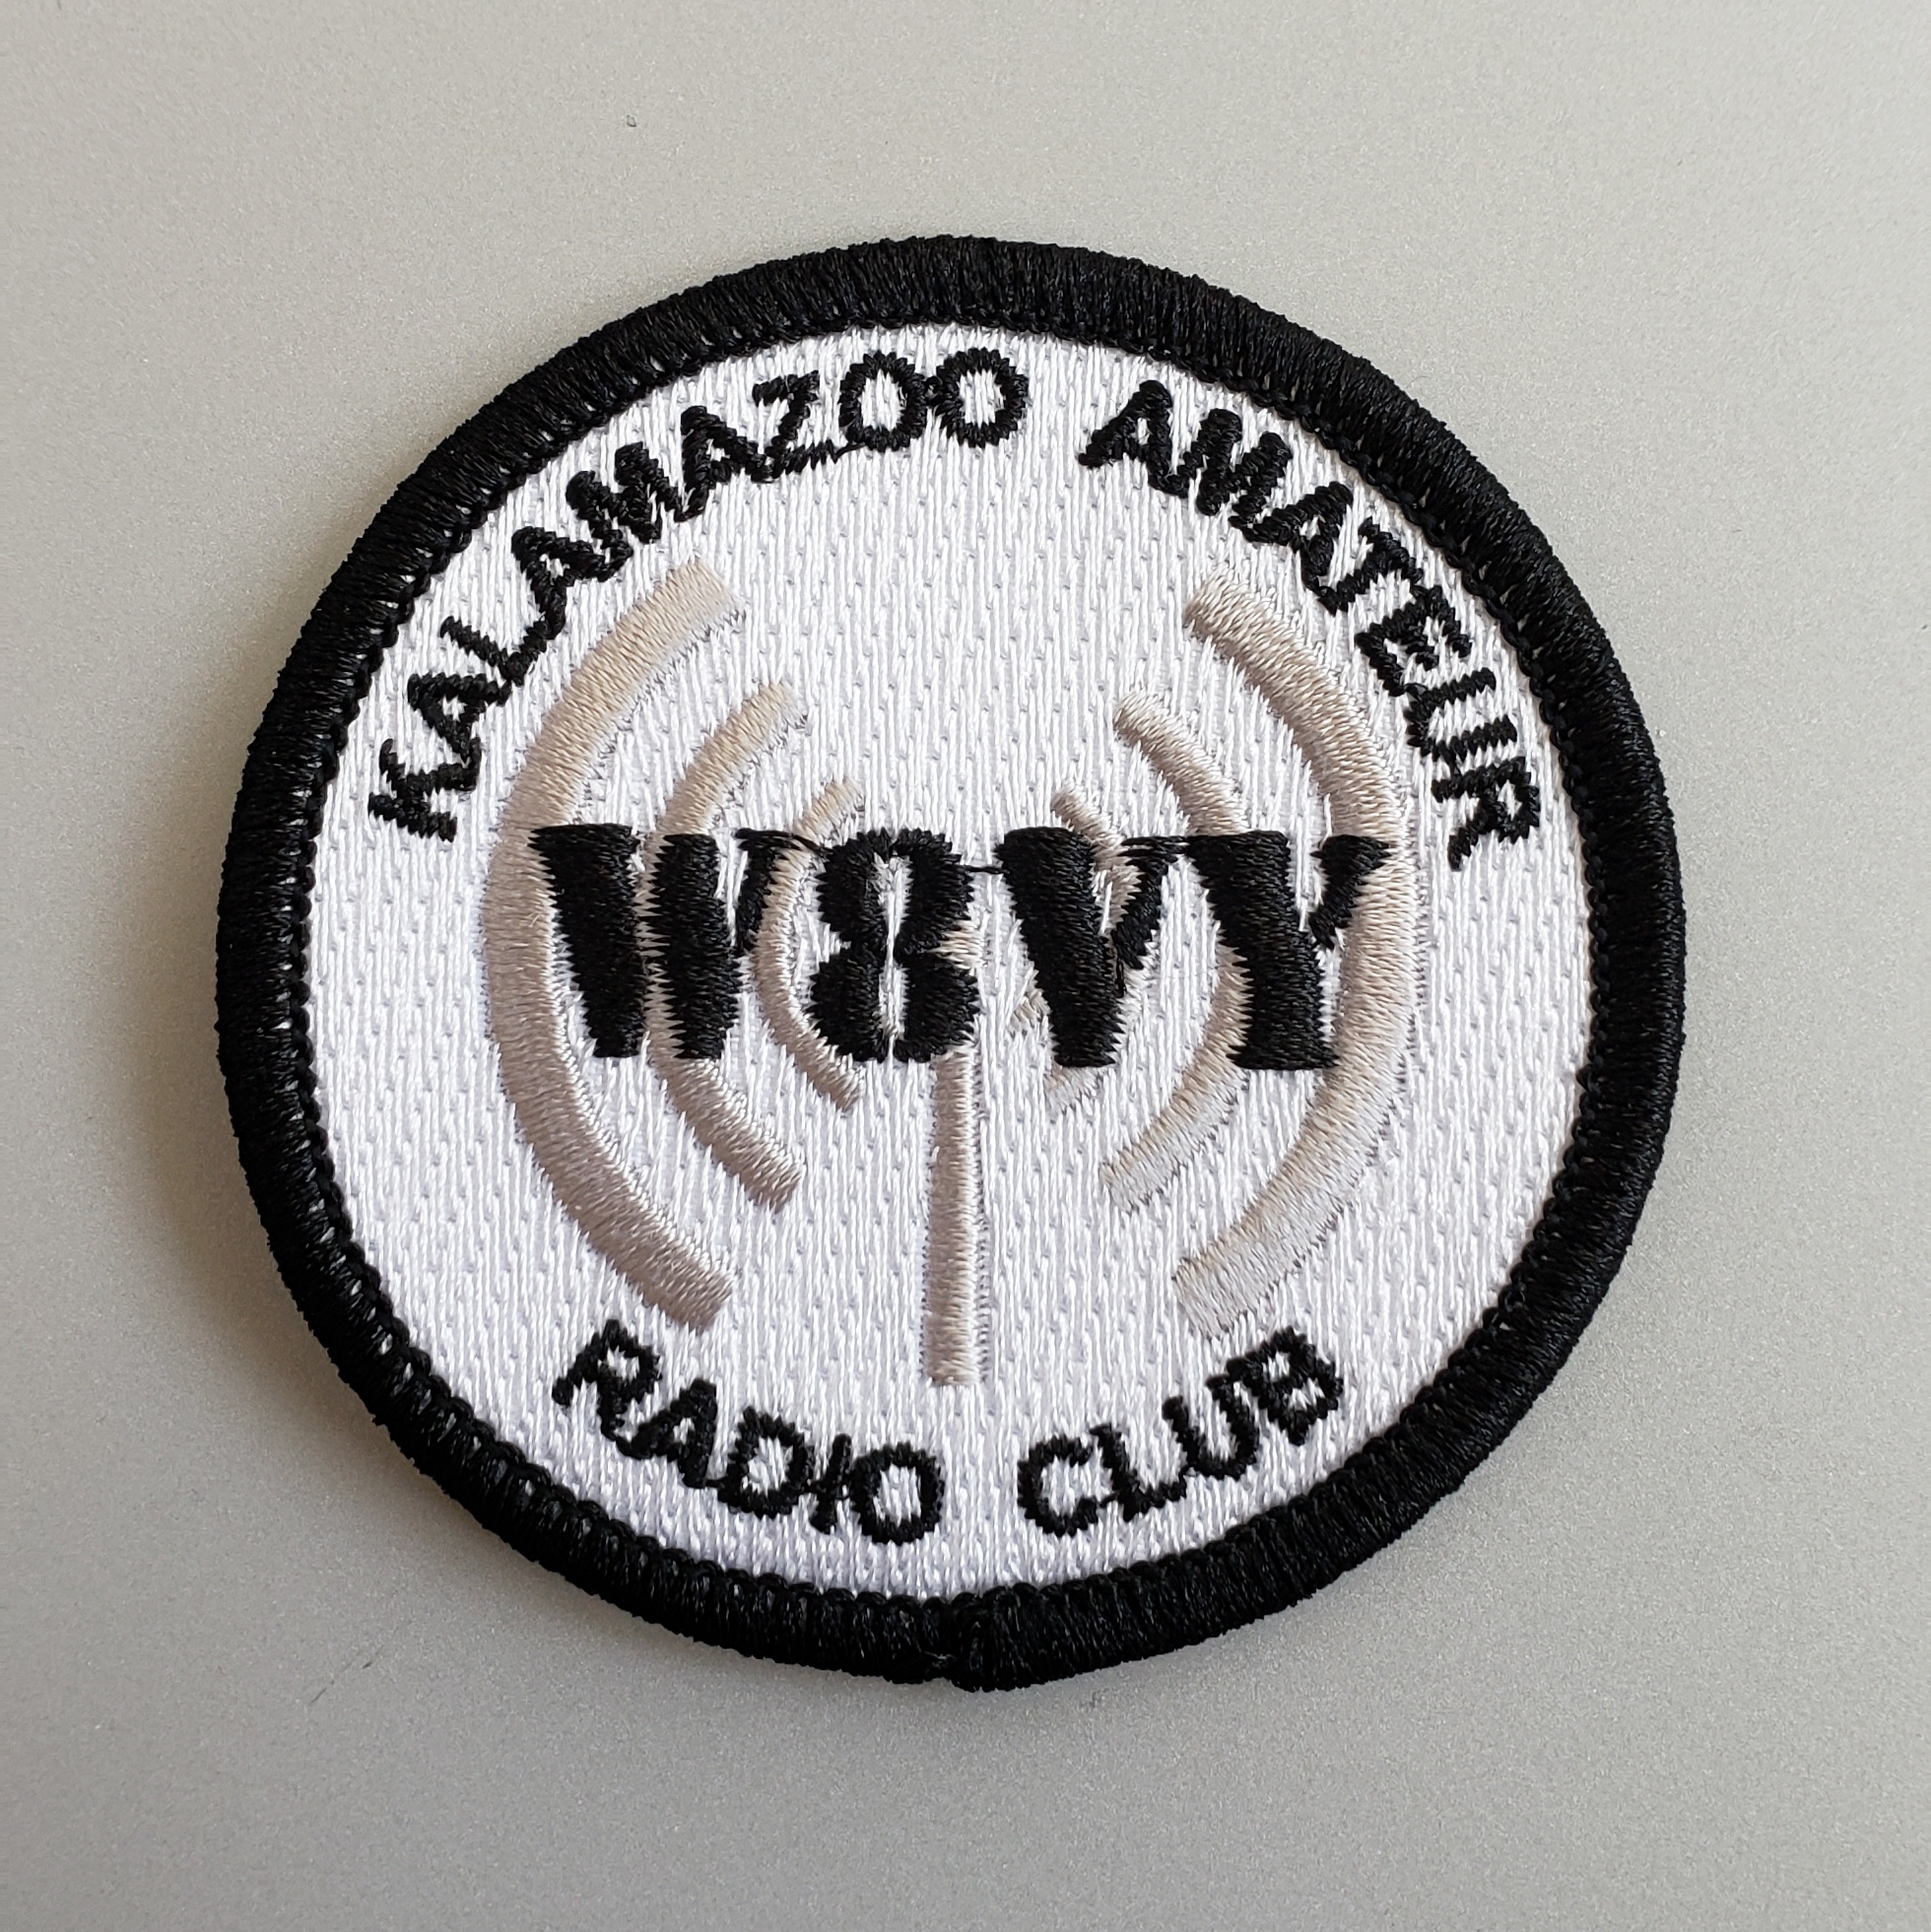 Freewave MM2  Amateur Radio Club